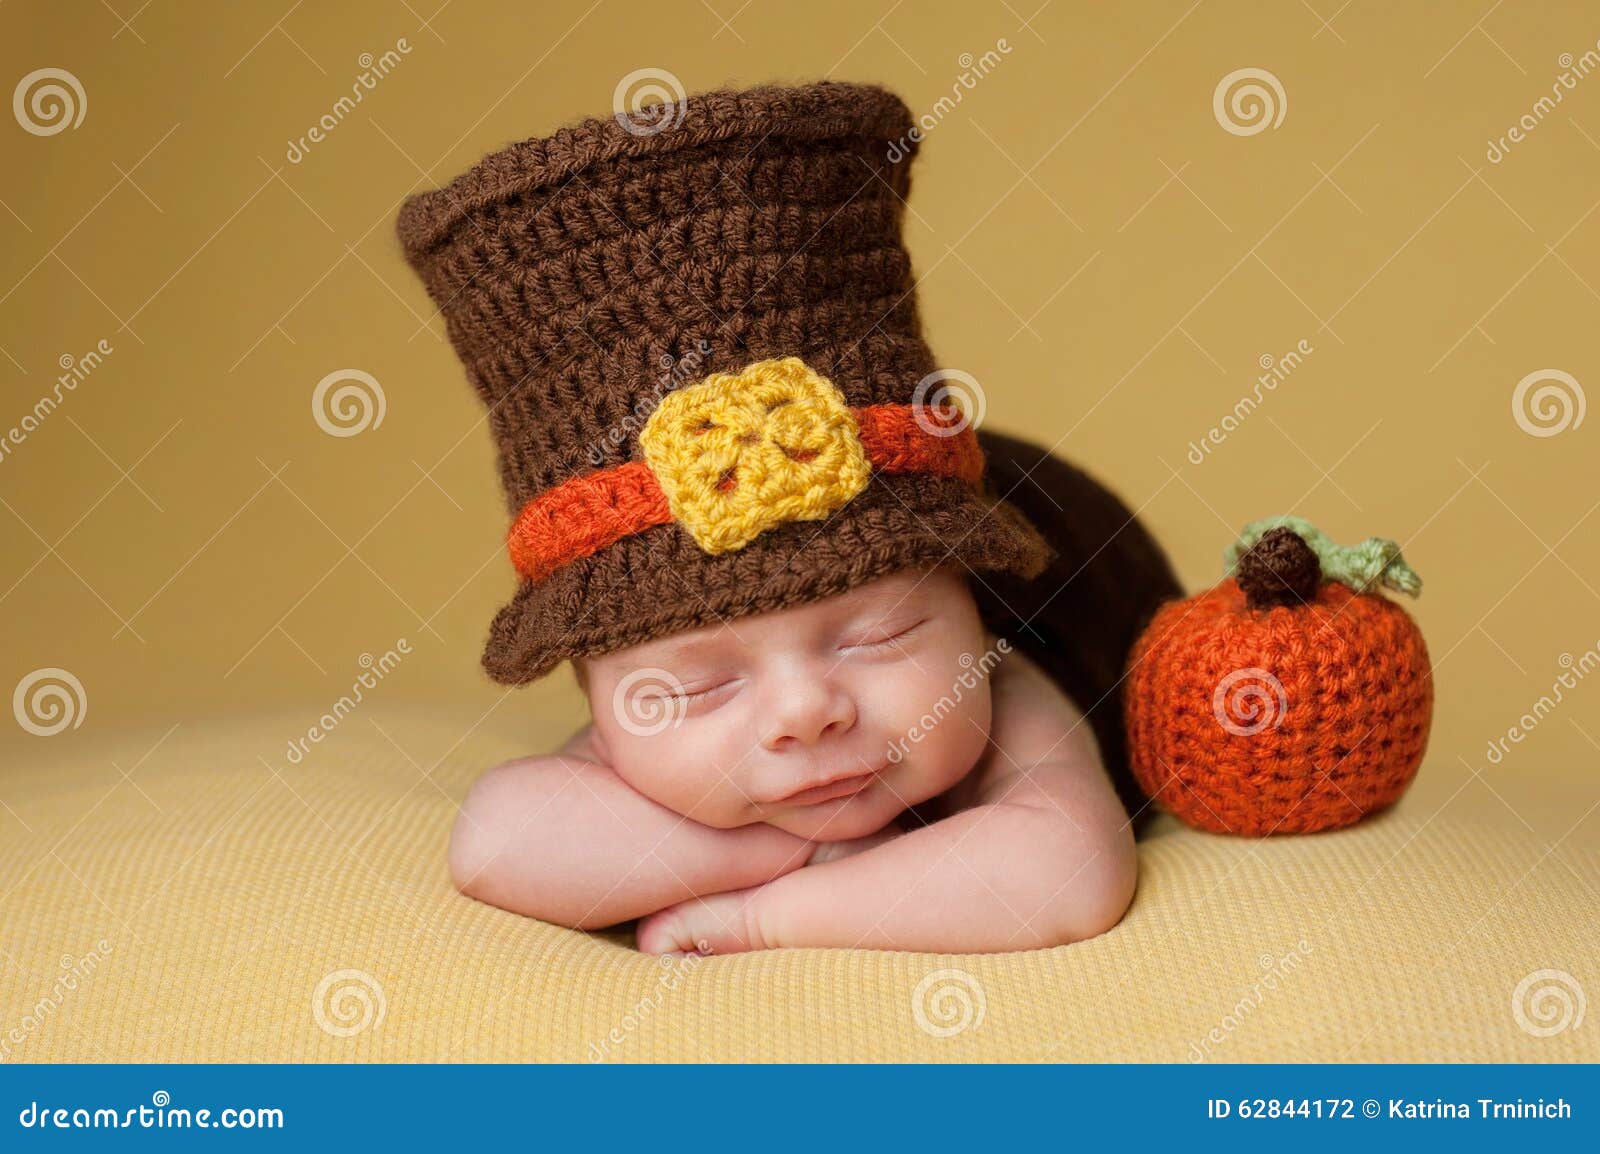 smiling newborn baby boy wearing a pilgrim hat